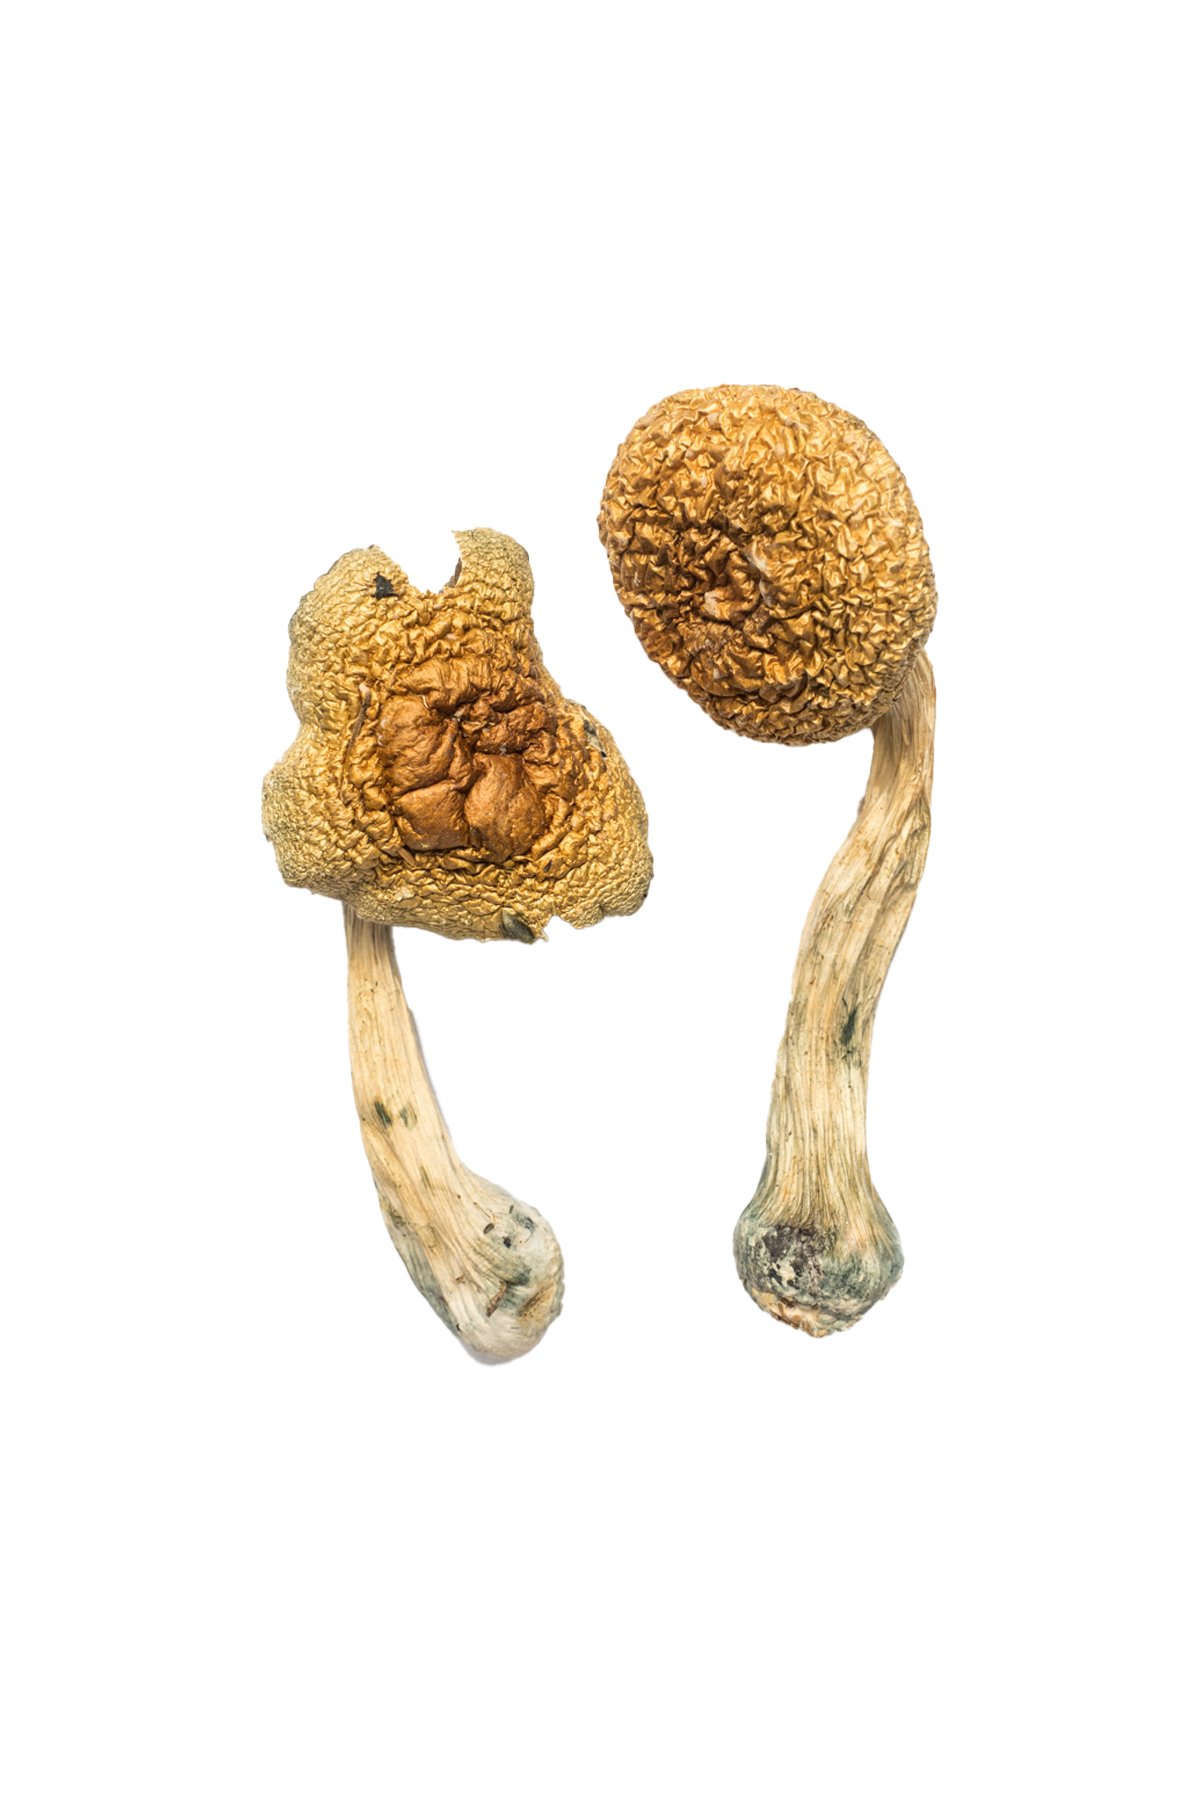 Buy Golden Mammoth Magic Mushrooms online